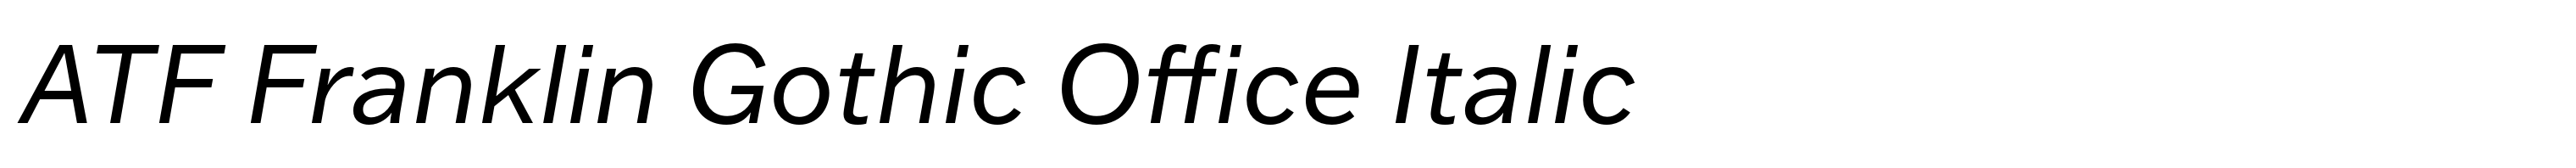 ATF Franklin Gothic Office Italic